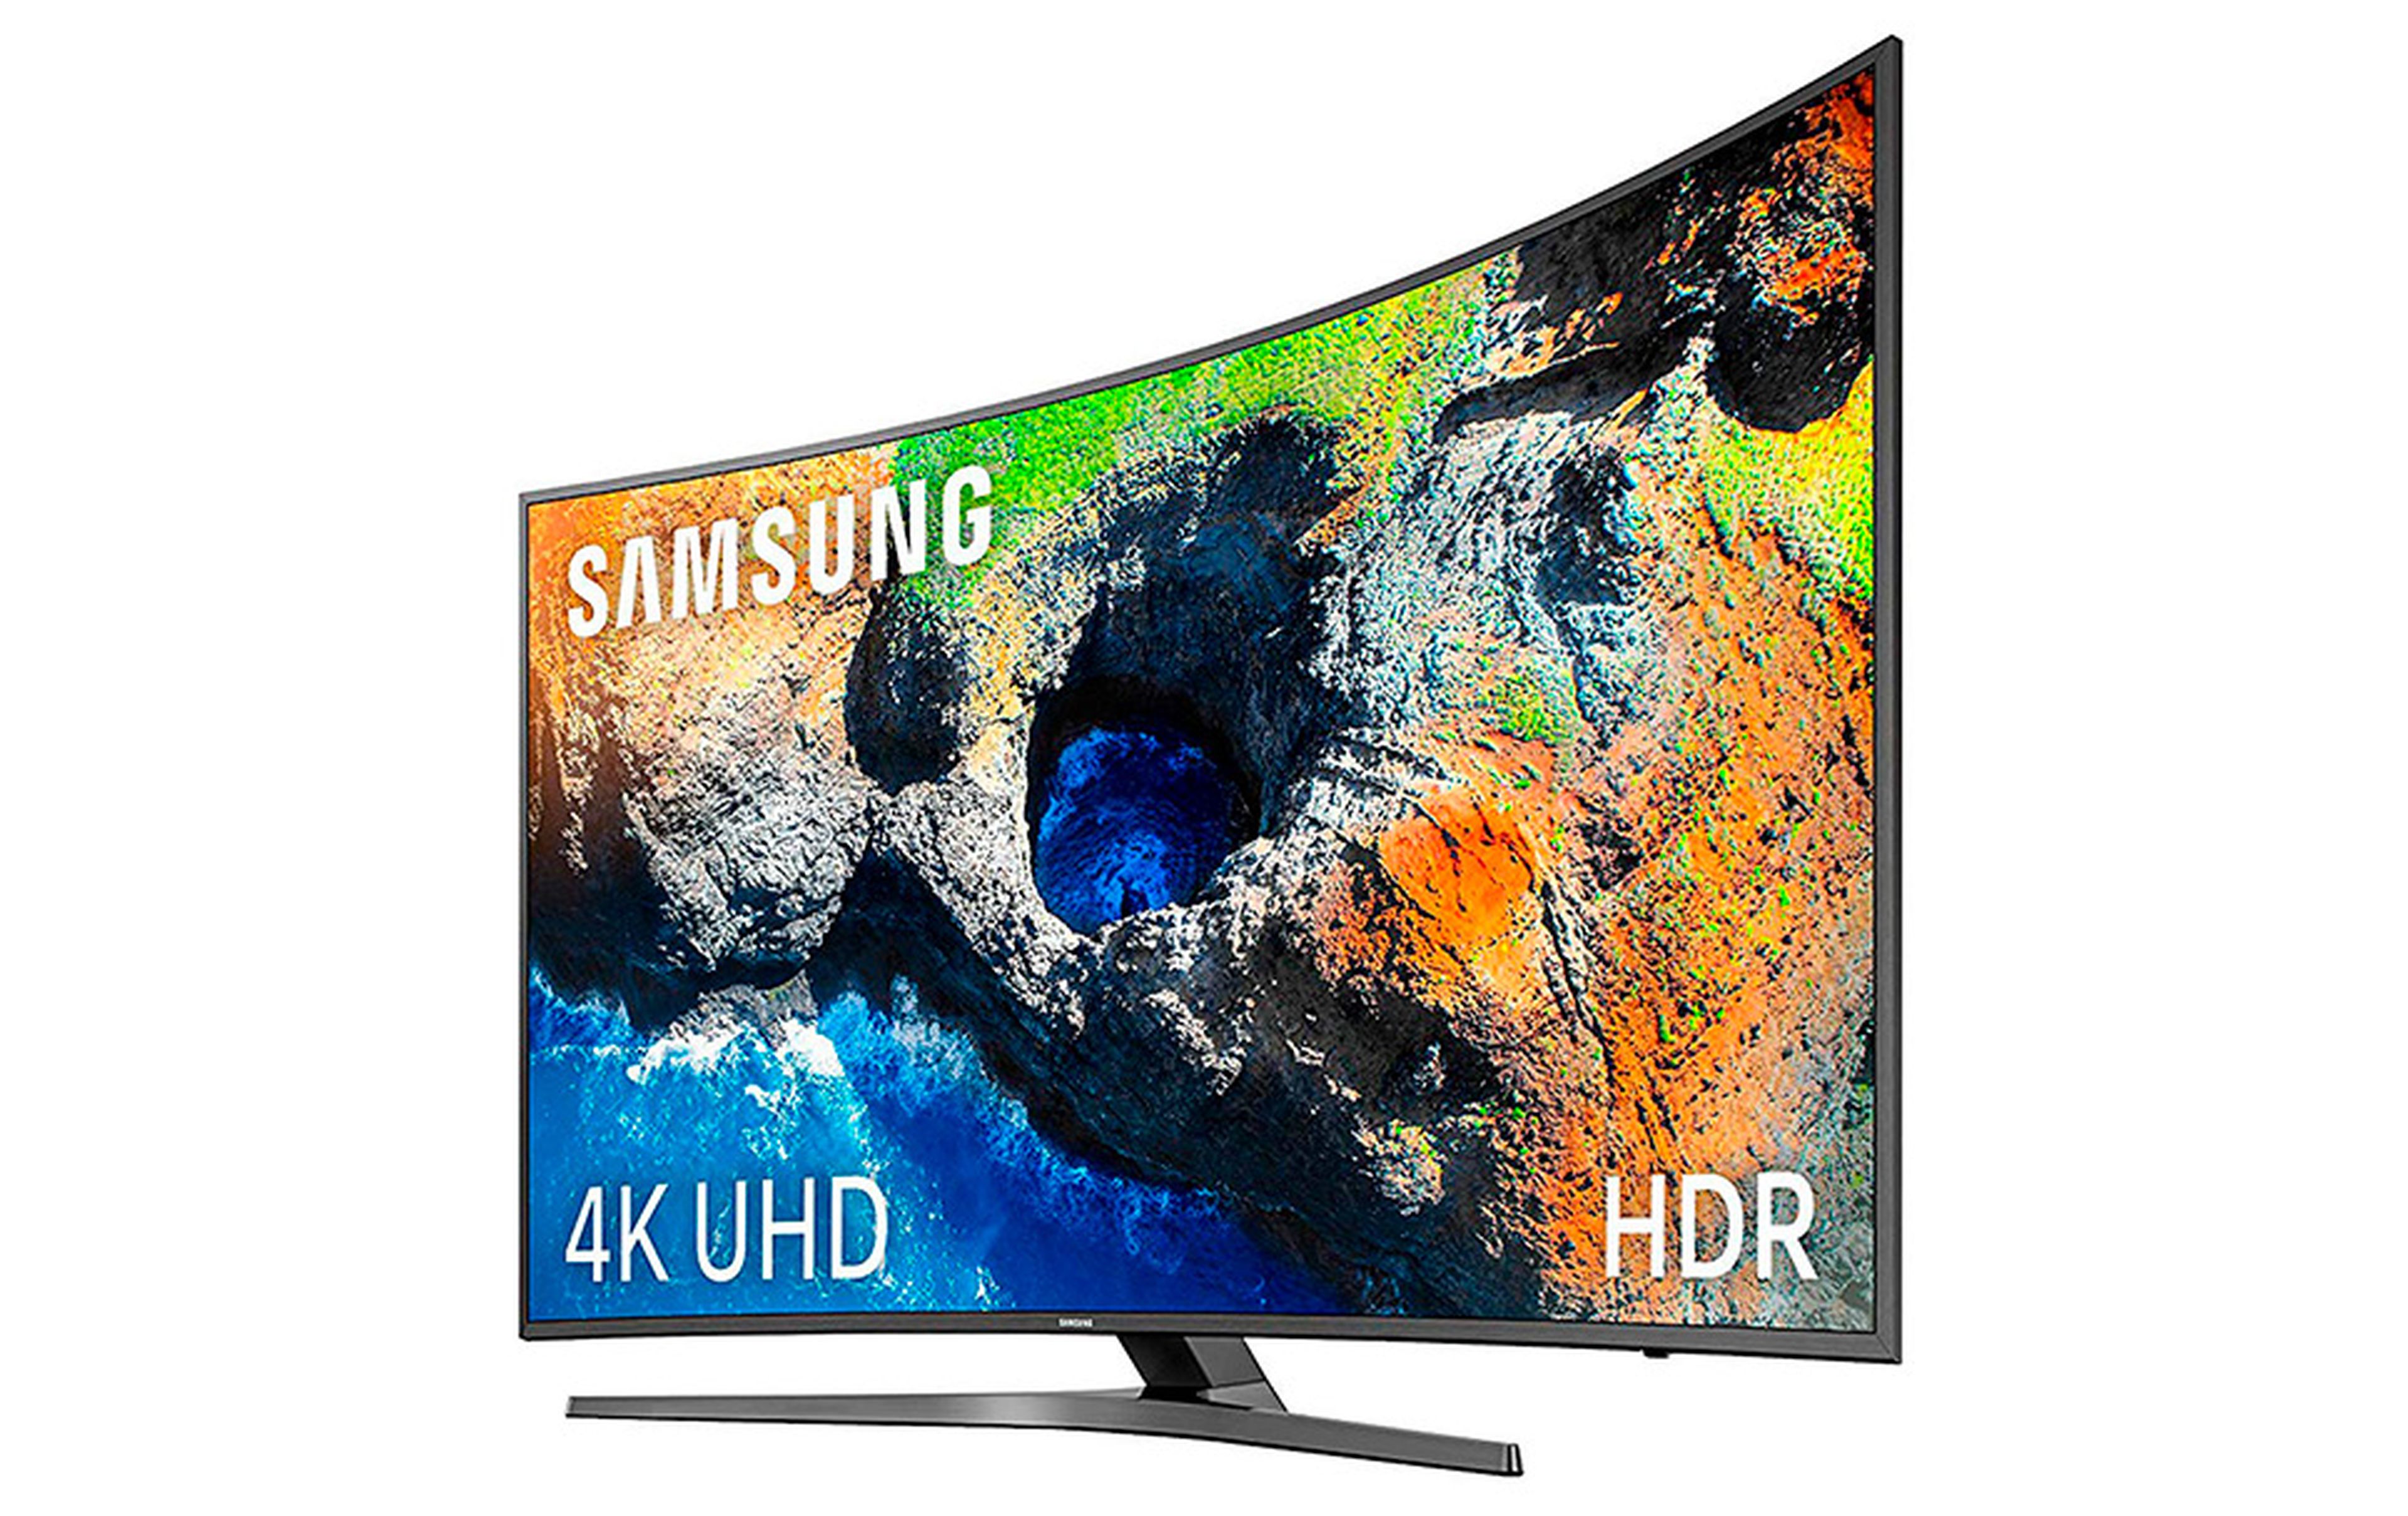 Mejores ofertas en TV 4K HDR